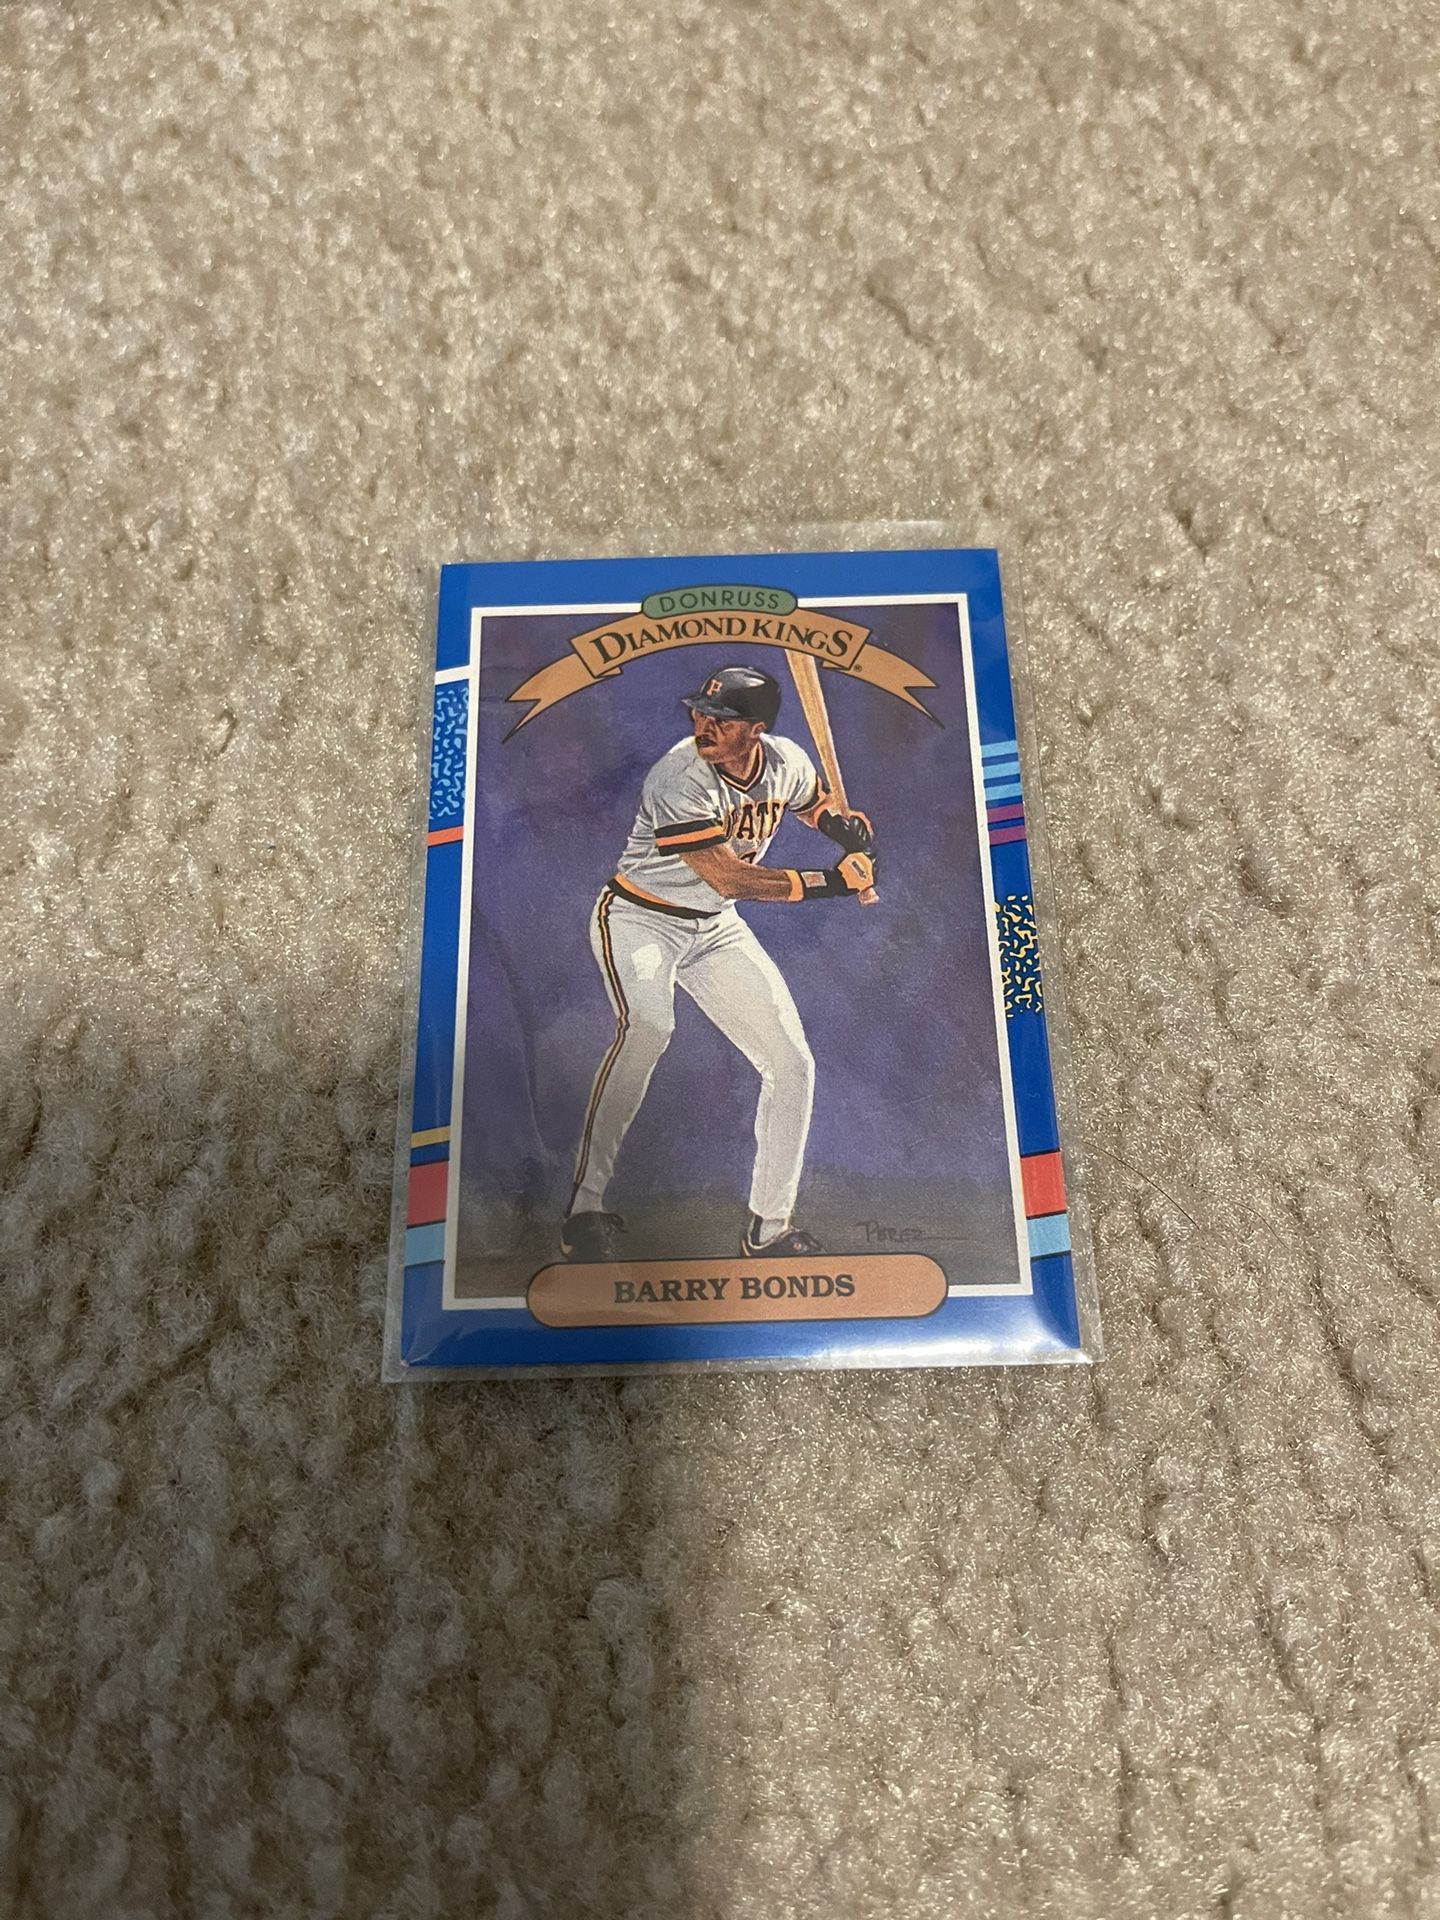  Barry Bonds - Vintage Collectible Baseball Card